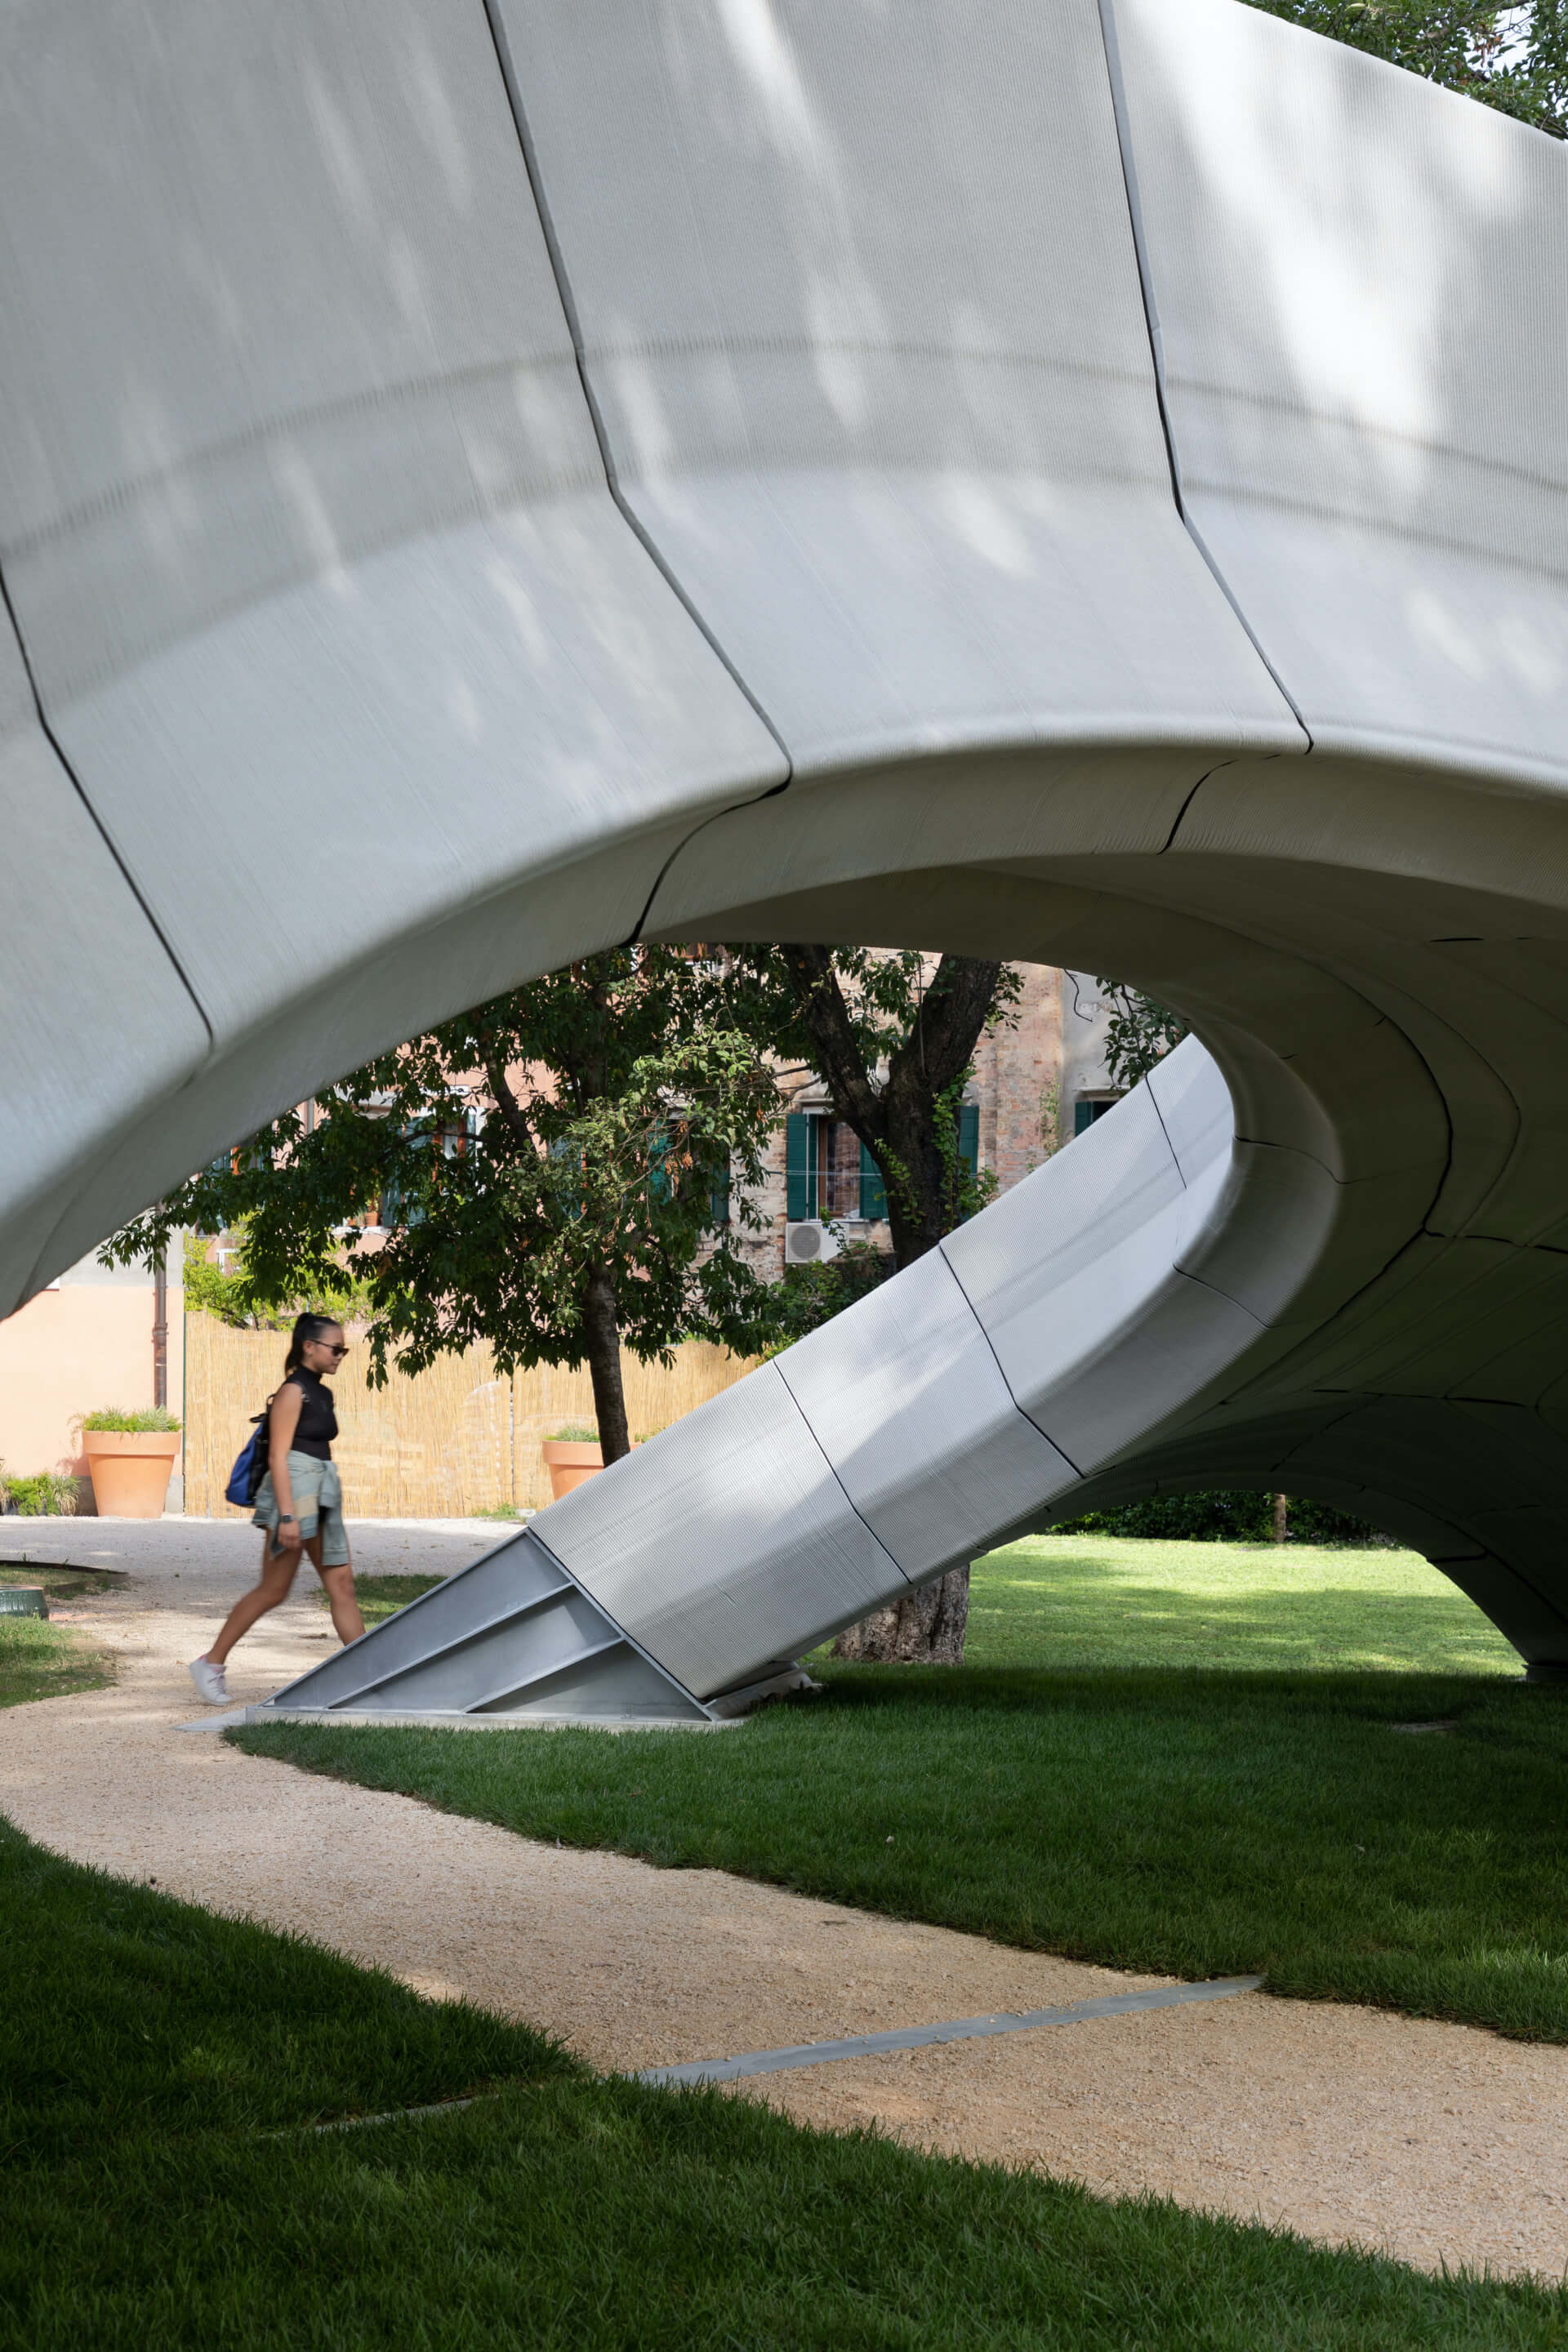 people explore a 3d-printed concrete arch footbridge located in a park